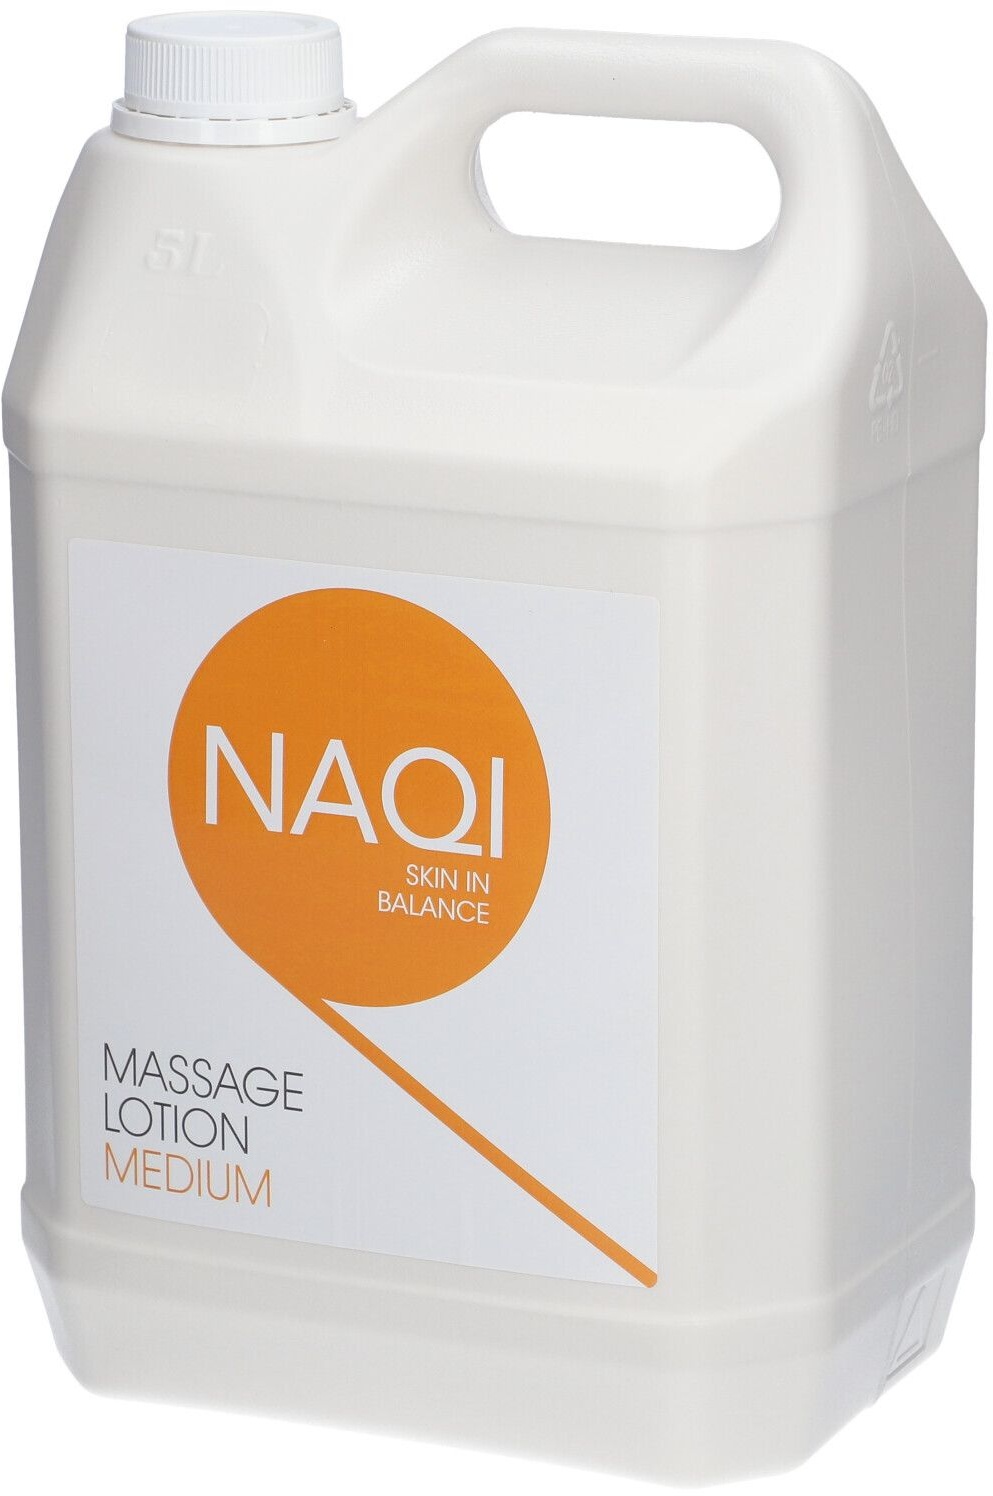 Naqi Massagelotion Medium 5 l lotion(s)